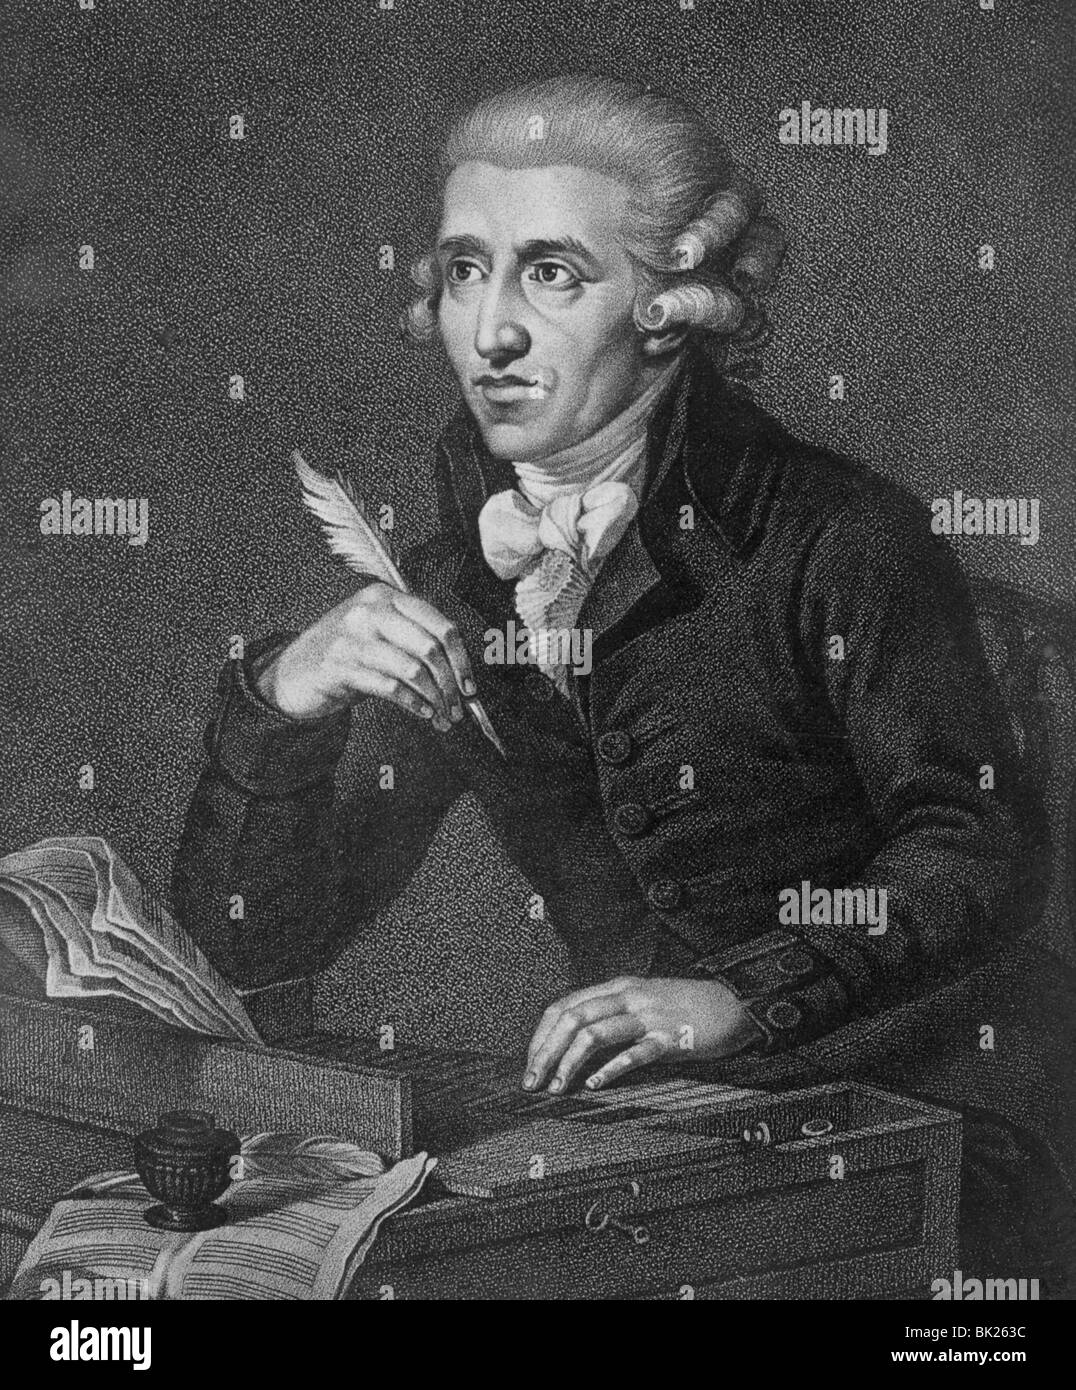 FRANZ JOSEPH HAYDN - compositore Austrlian (1732-1809) Foto Stock